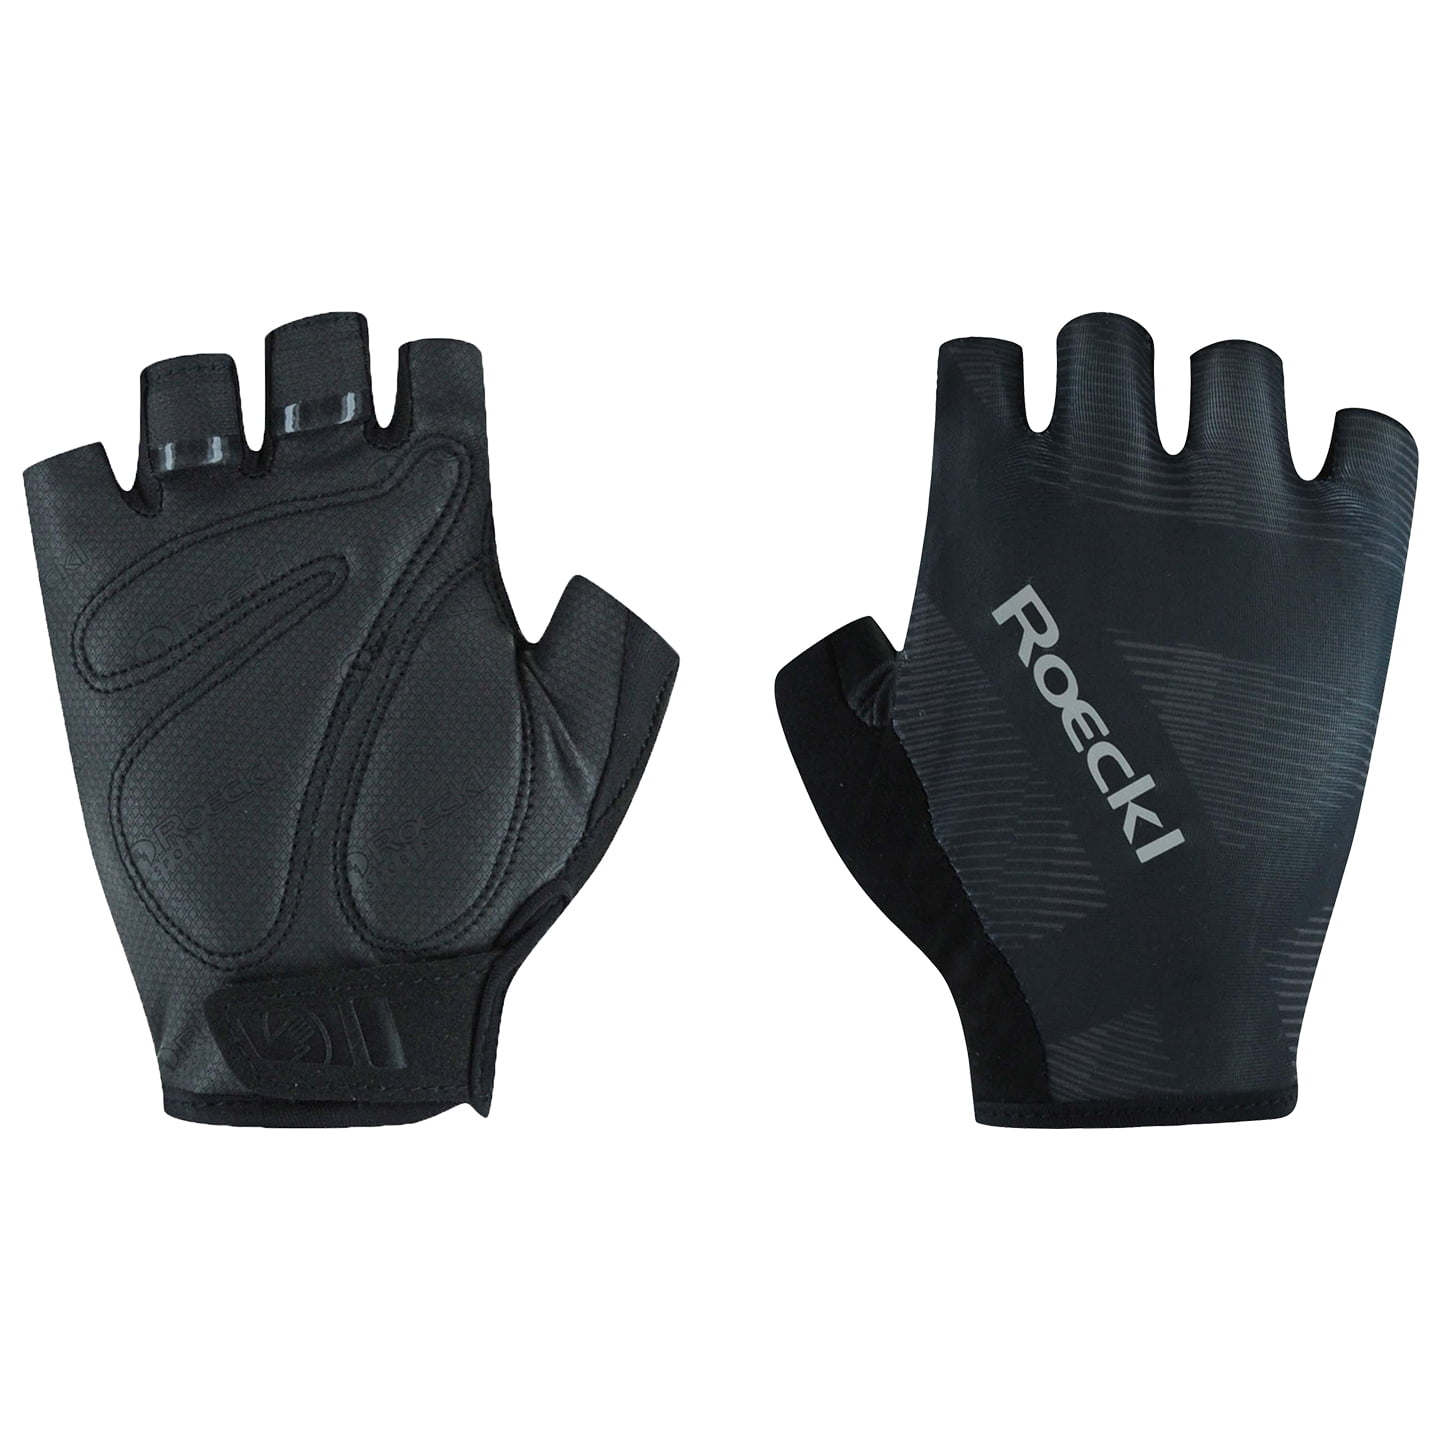 ROECKL Busano Gloves Cycling Gloves, for men, size 9, Bike gloves, Bike wear